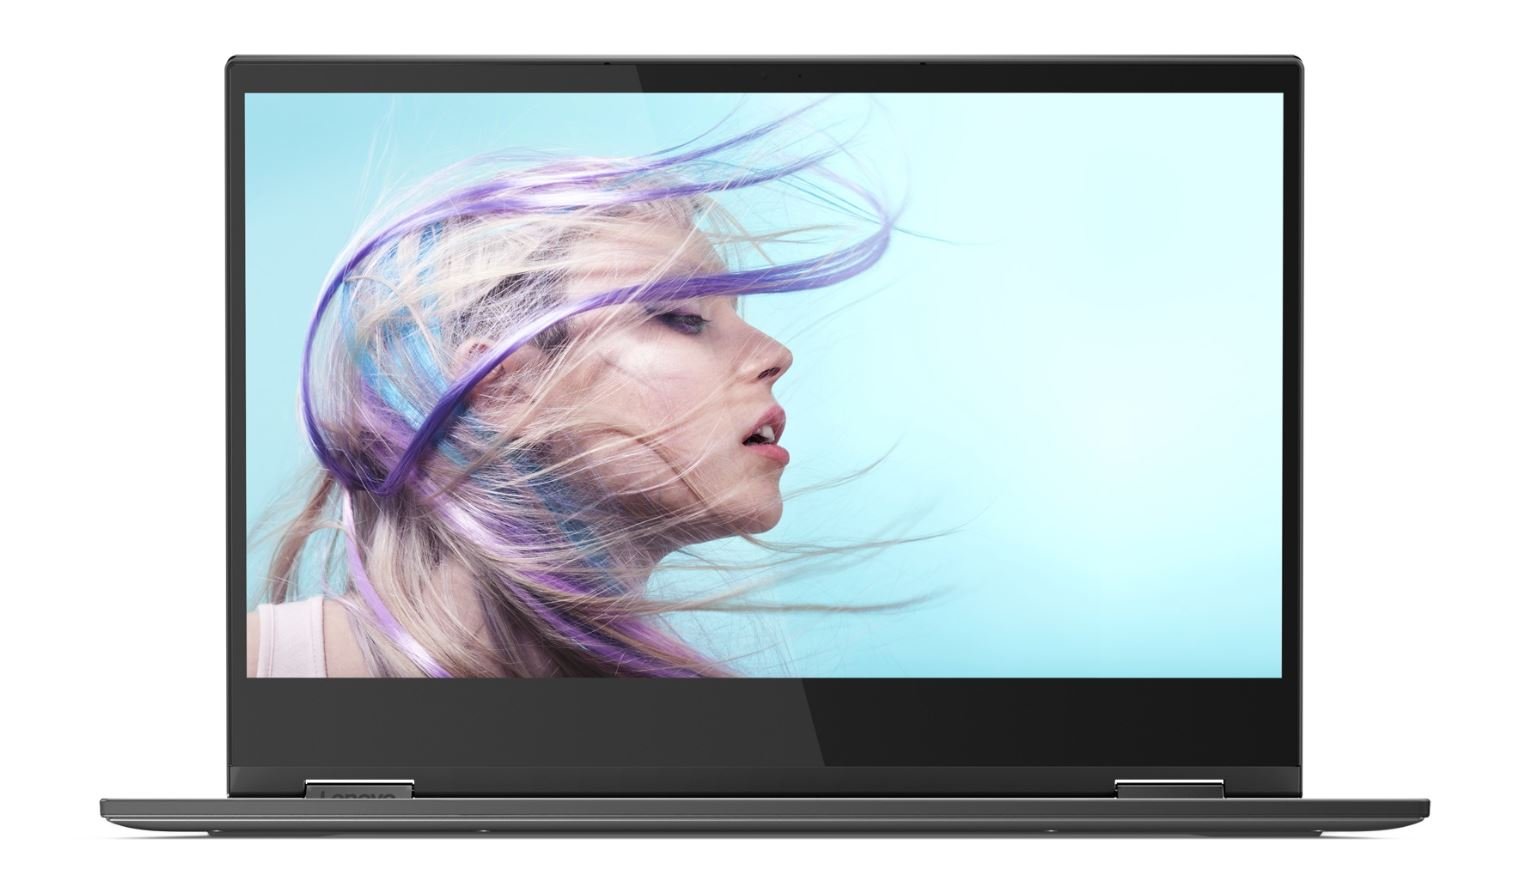 Lenovo Yoga C630 Snapdragon 850 laptop pass through the FCC